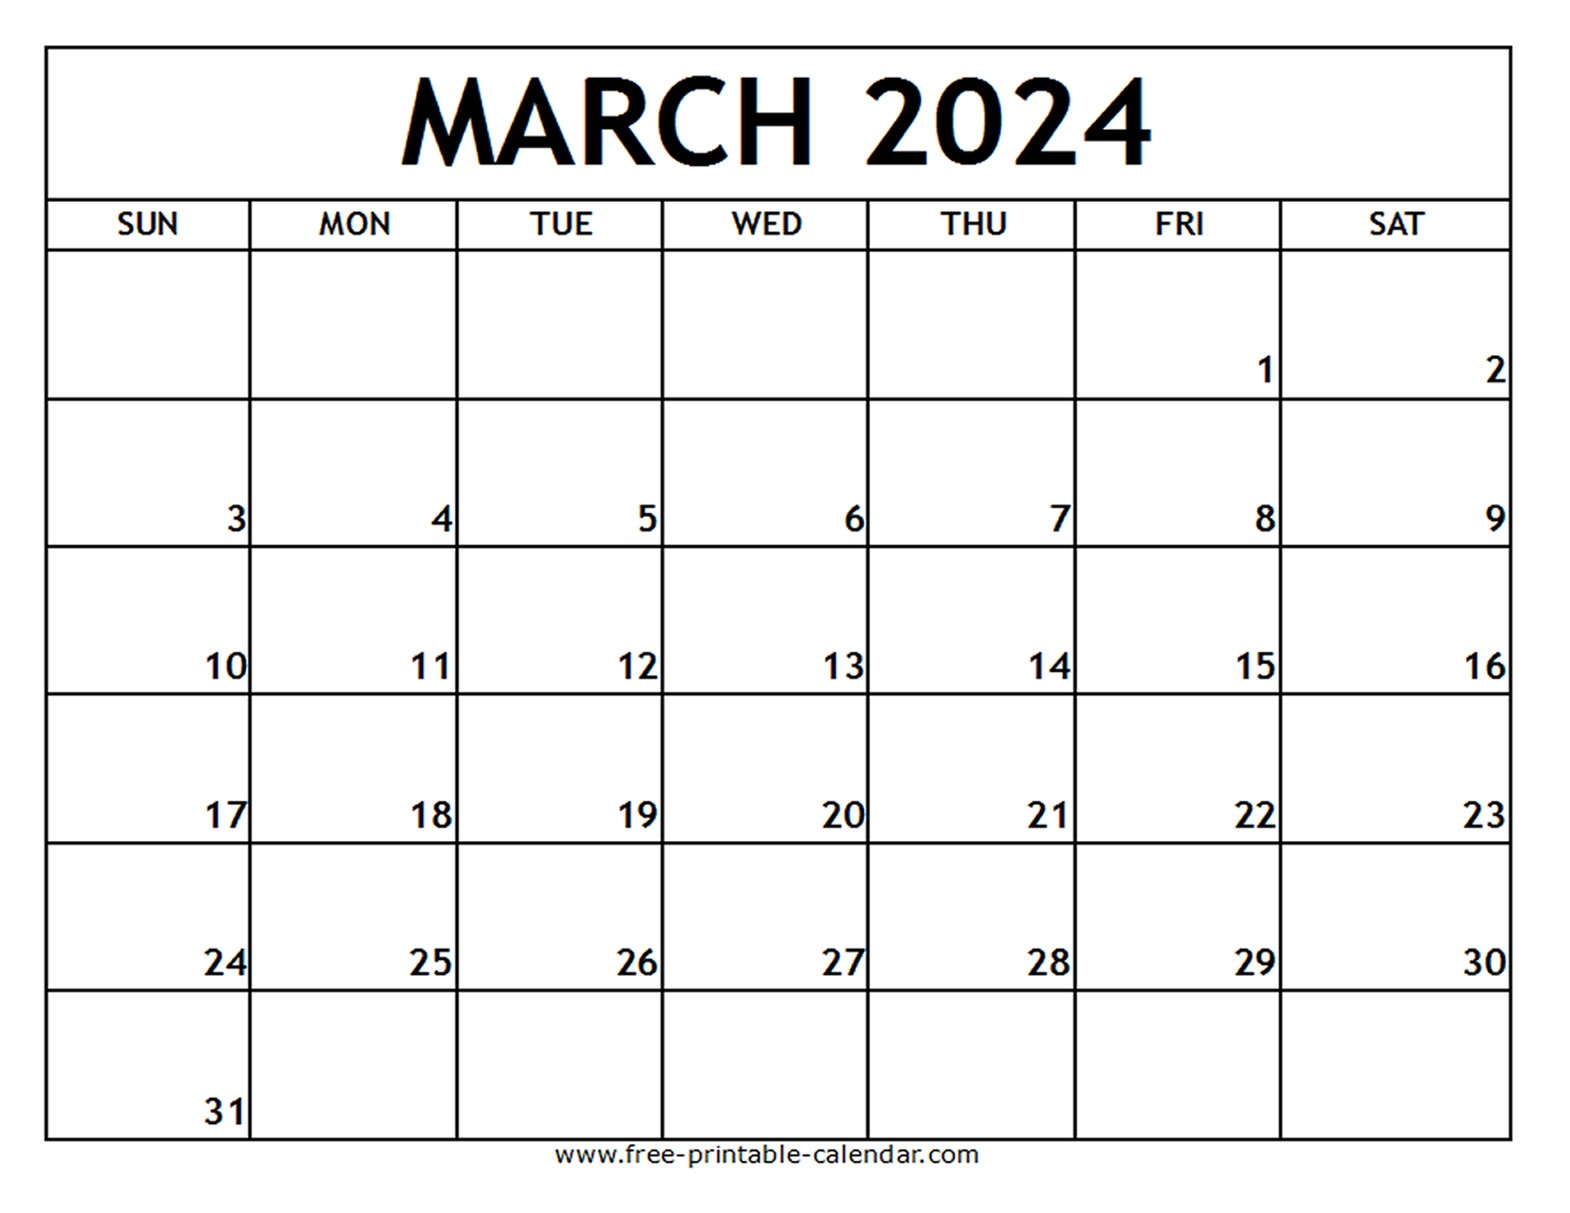 March 2024 Printable Calendar - Free-Printable-Calendar regarding Free Printable Calendar 2024 March